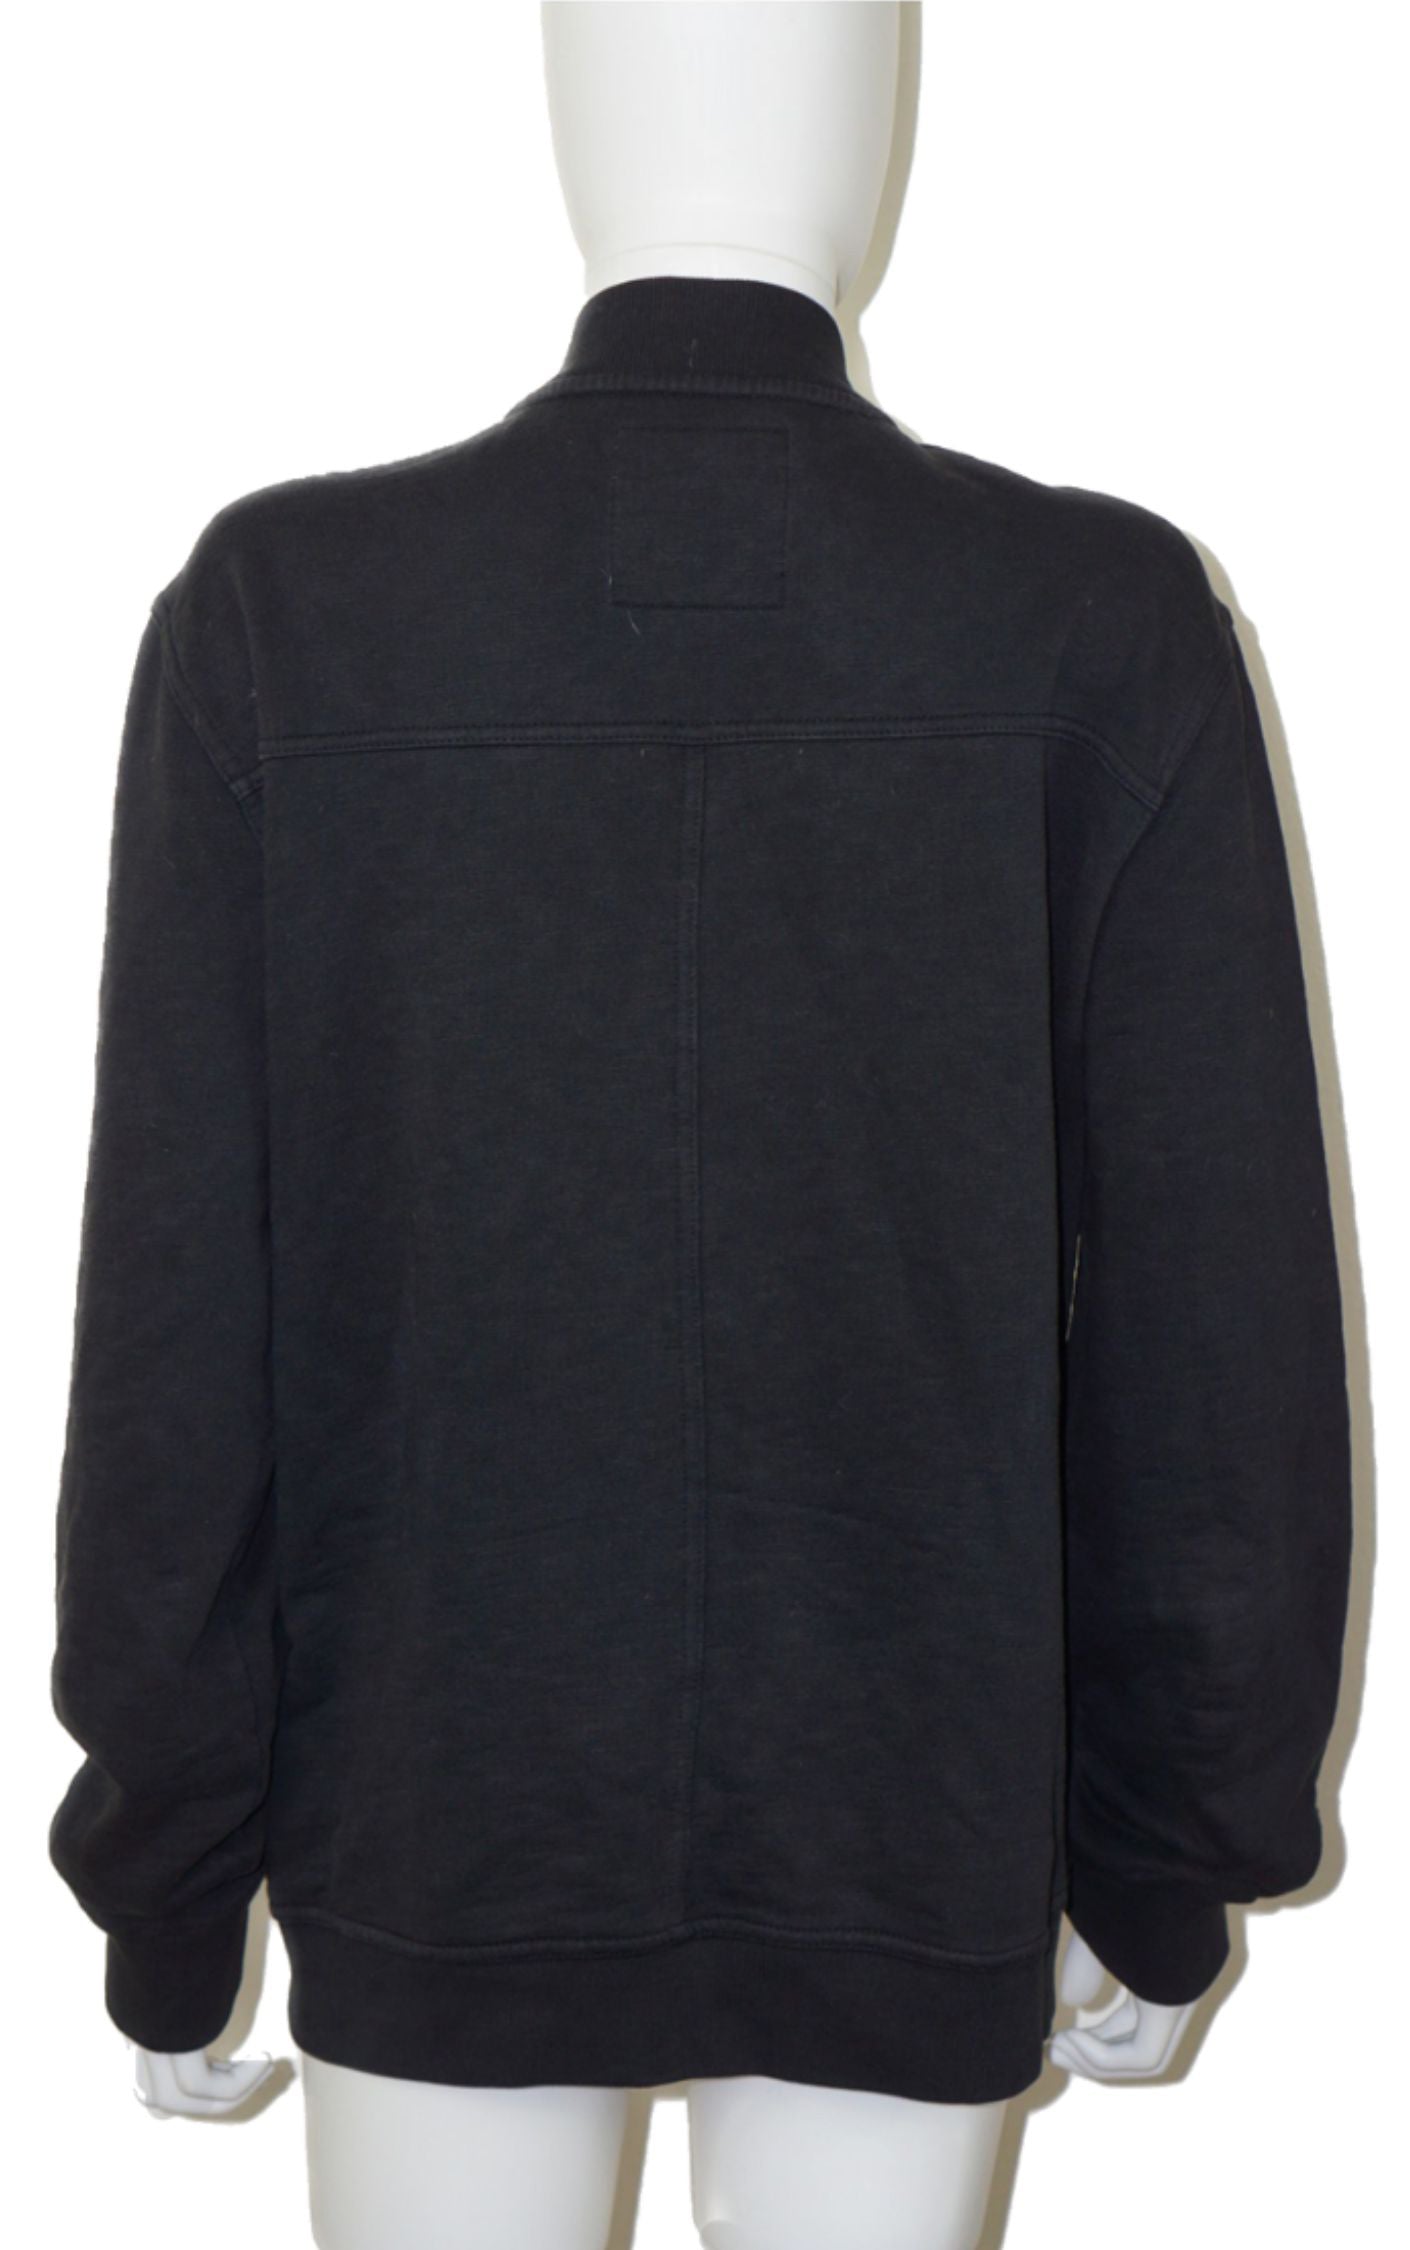 ALL SAINTS Logo Black Zip Up Sweater Jacket resellum